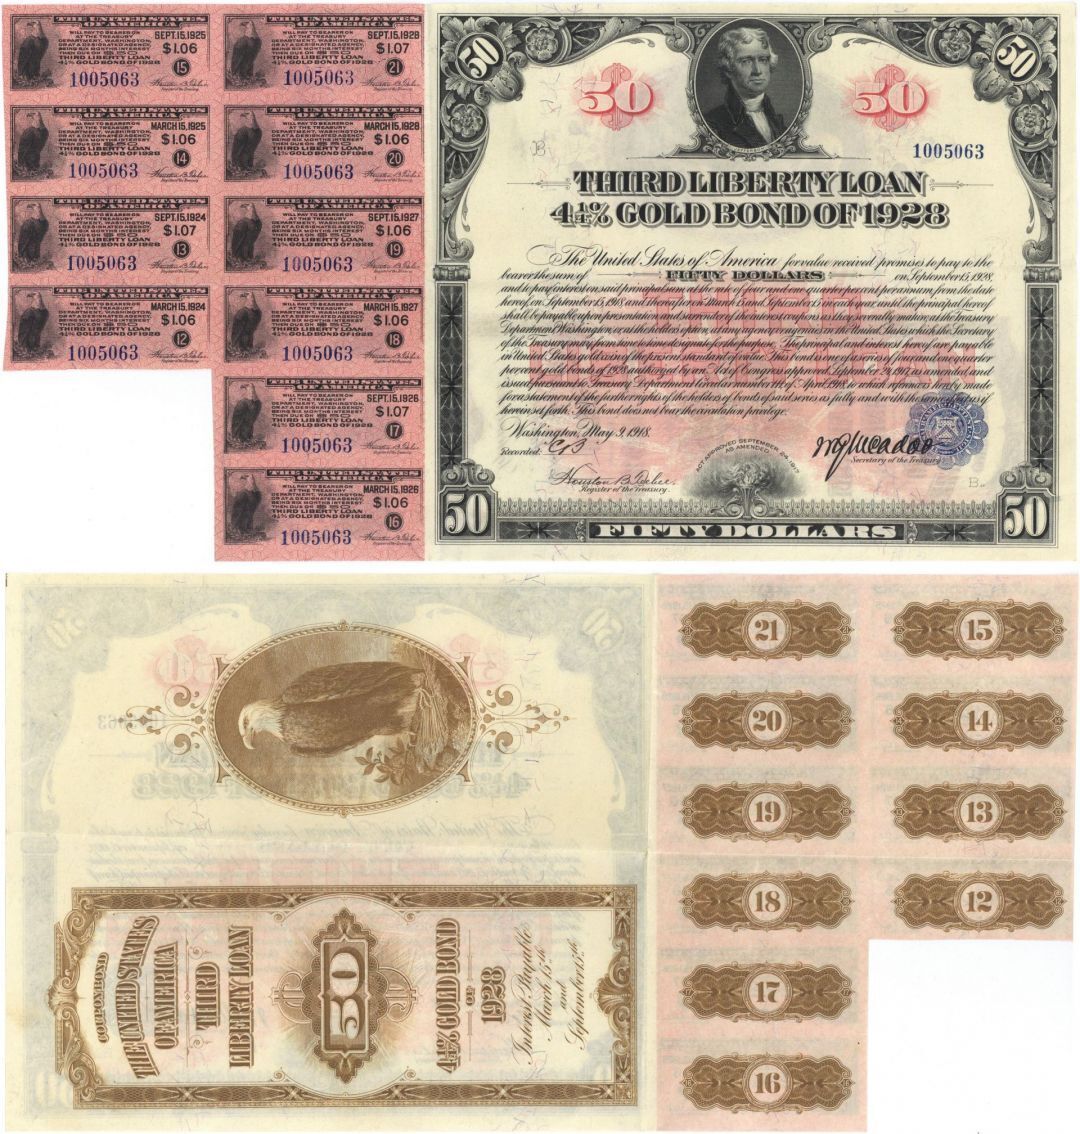 $50 1918 3rd Liberty Bond - Gorgeous Red Color - U. S. Treasury Bonds, etc.